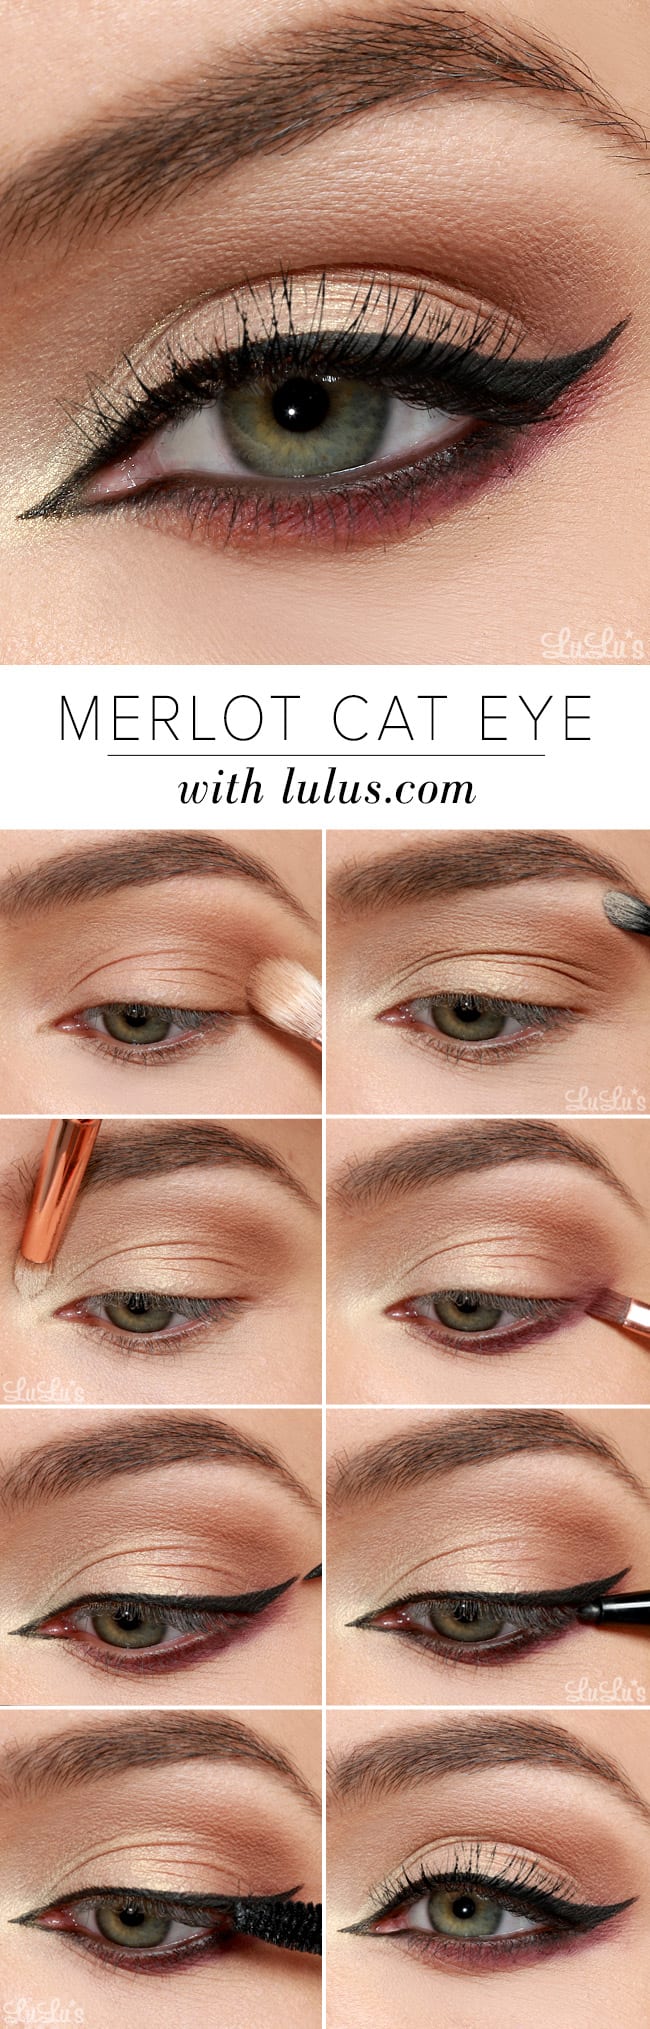 Lulus How-To: Merlot Cat Eye Makeup Tutorial - Lulus.com Fashion Blog